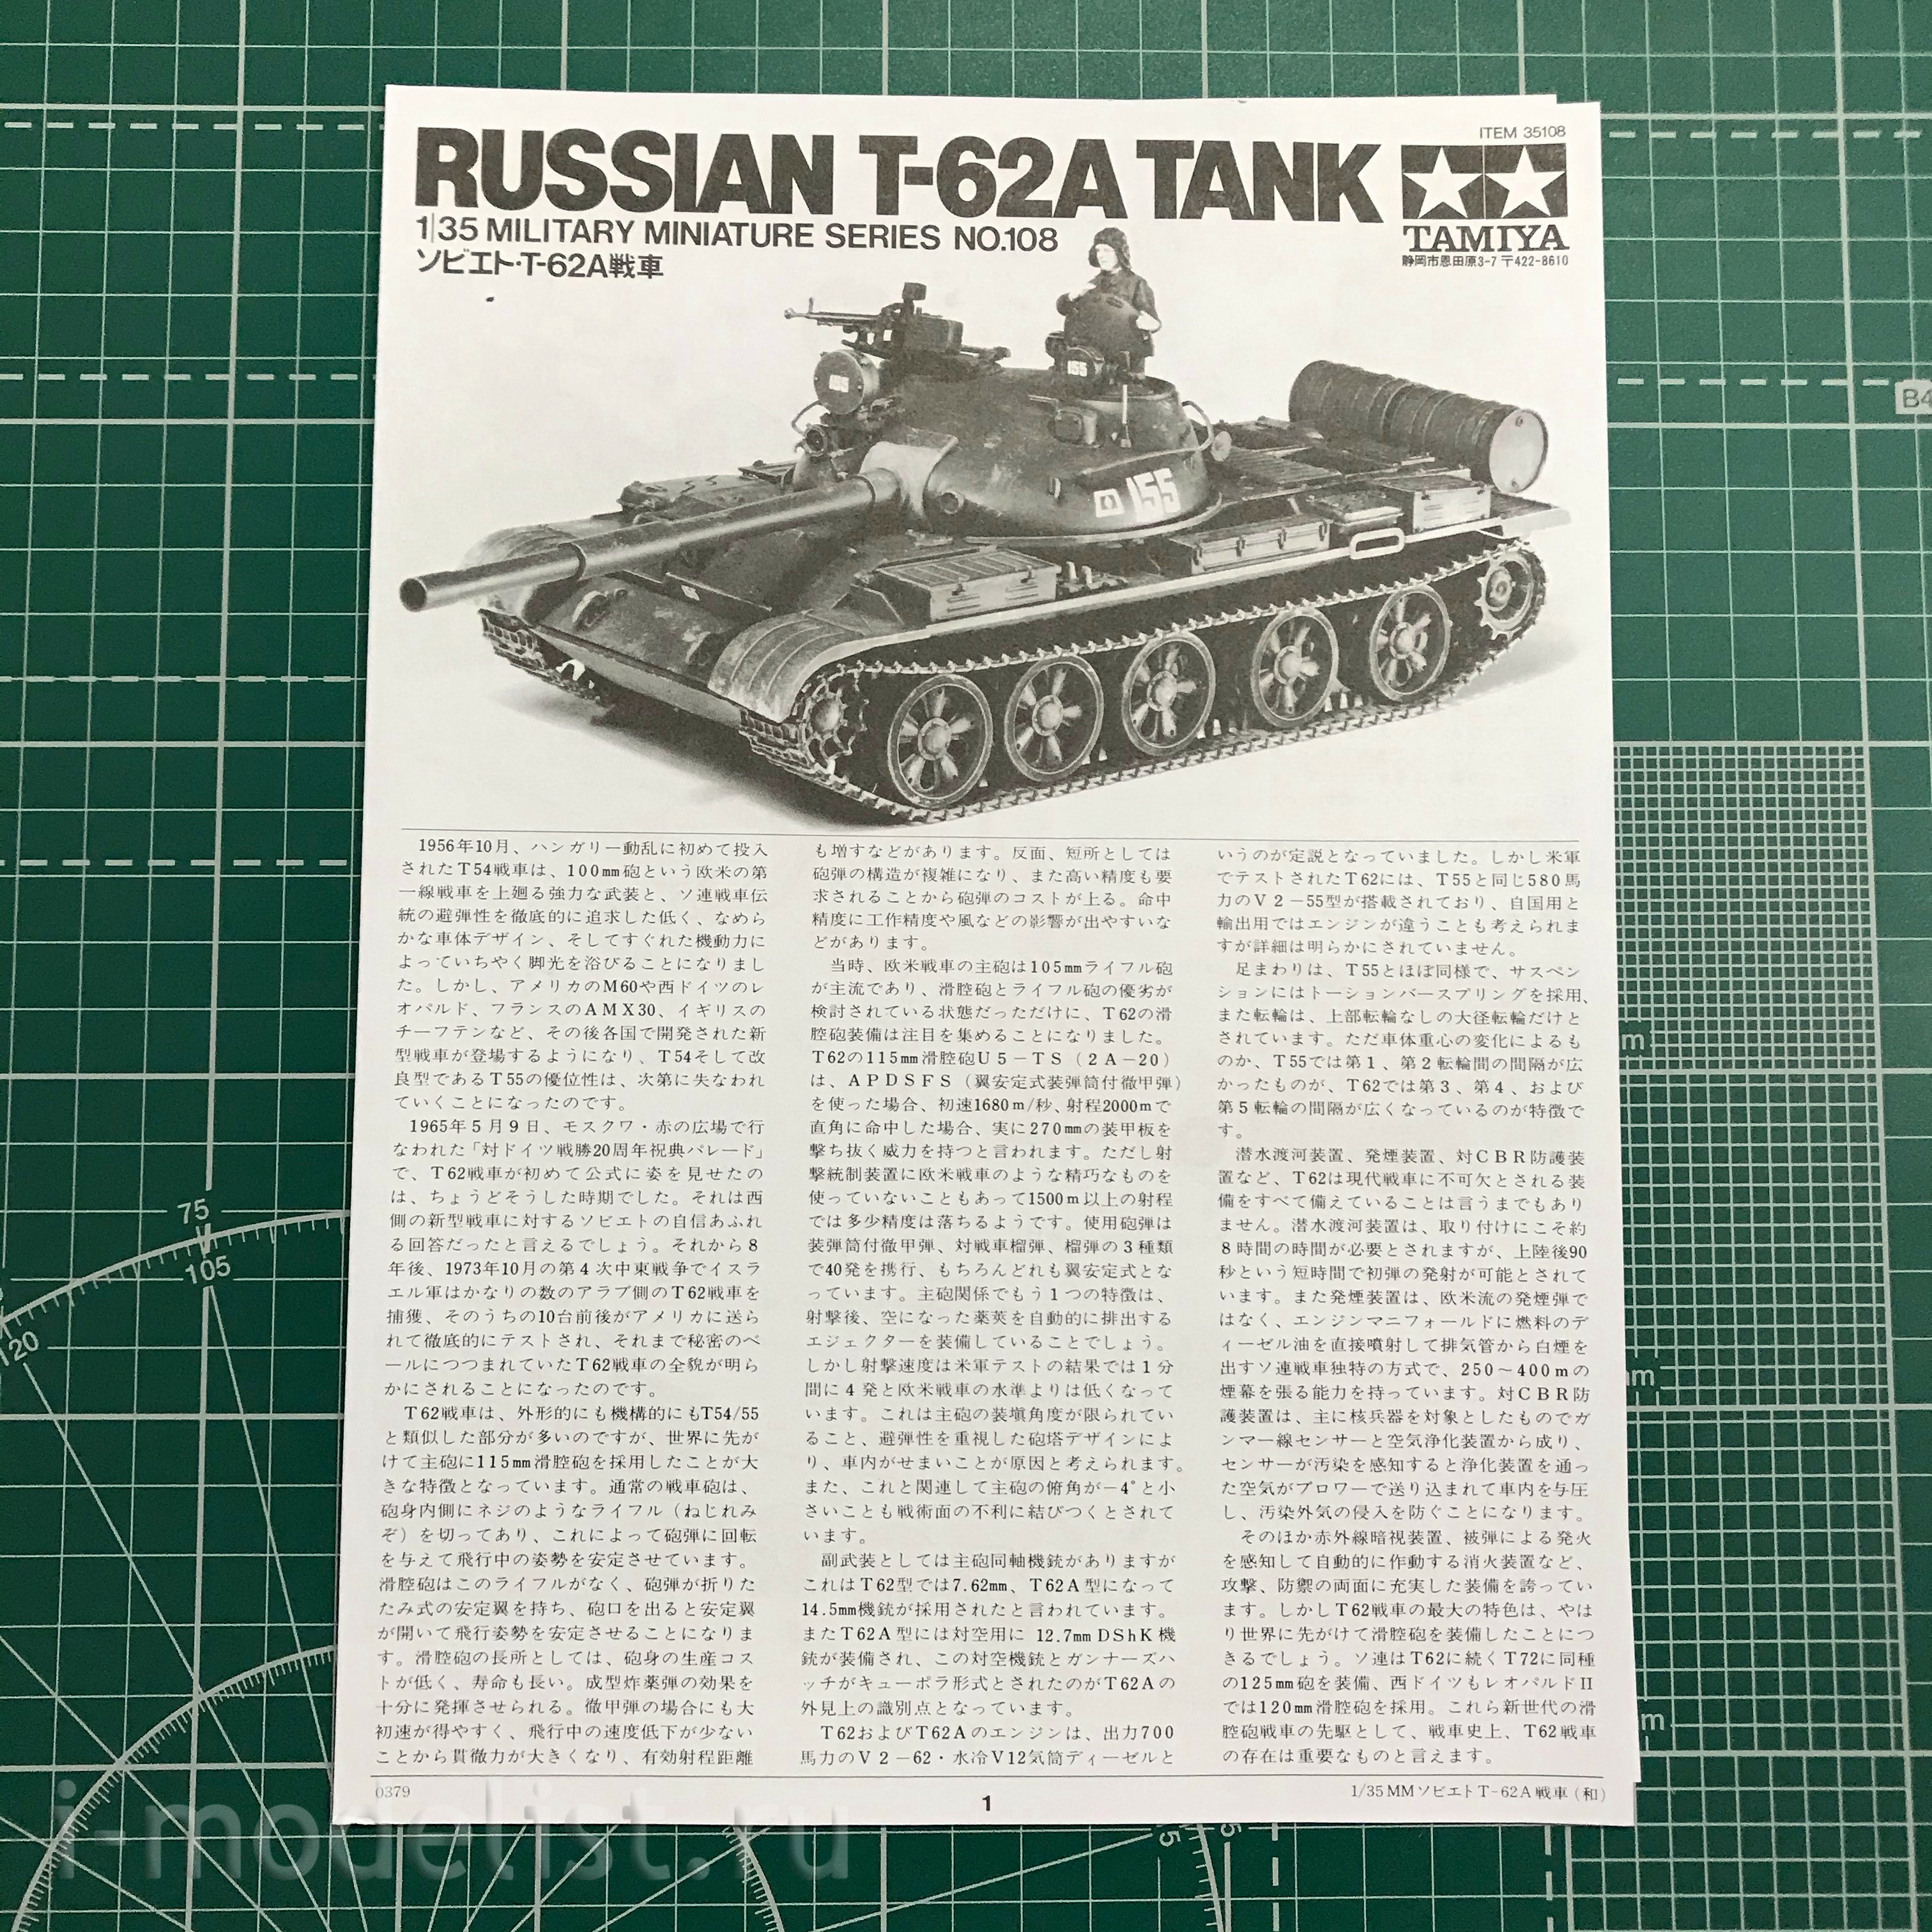 35108 Tamiya 1/35 Советский танк Т-62А с 1 фигурой